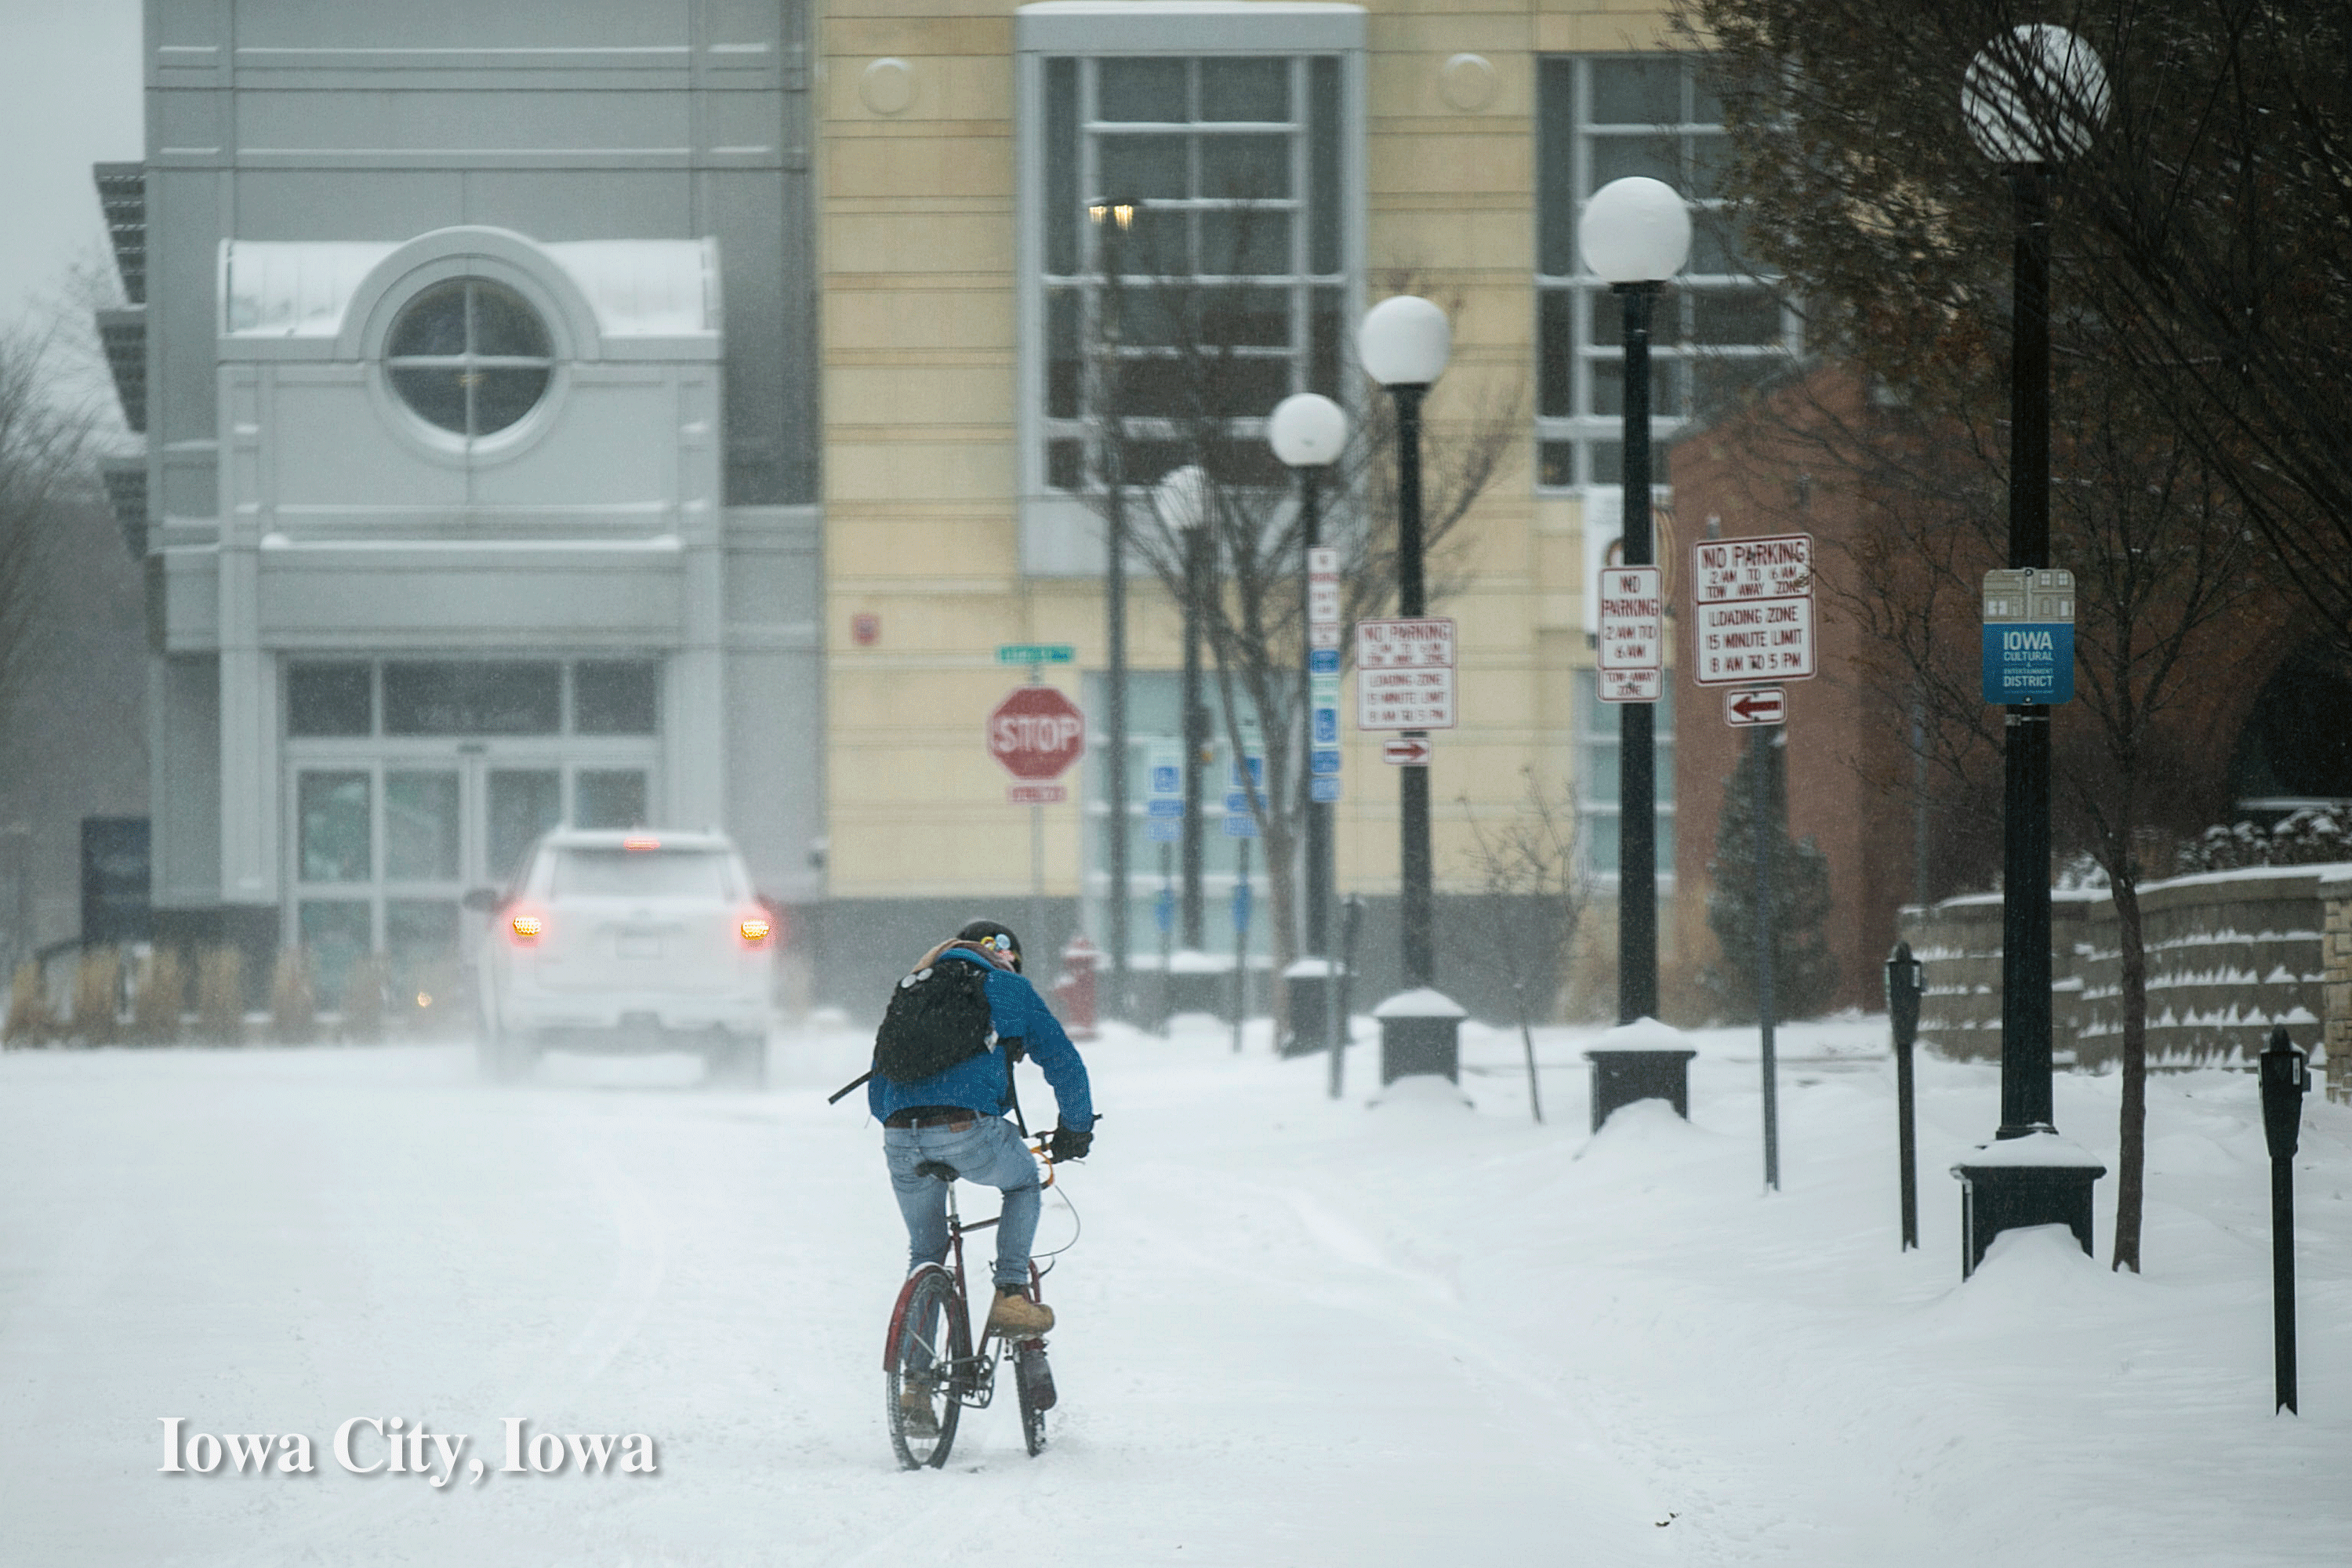 Snowy road in Iowa City, Iowa and bicyclists riding around Shoreline Aquatic Park in Long Beach